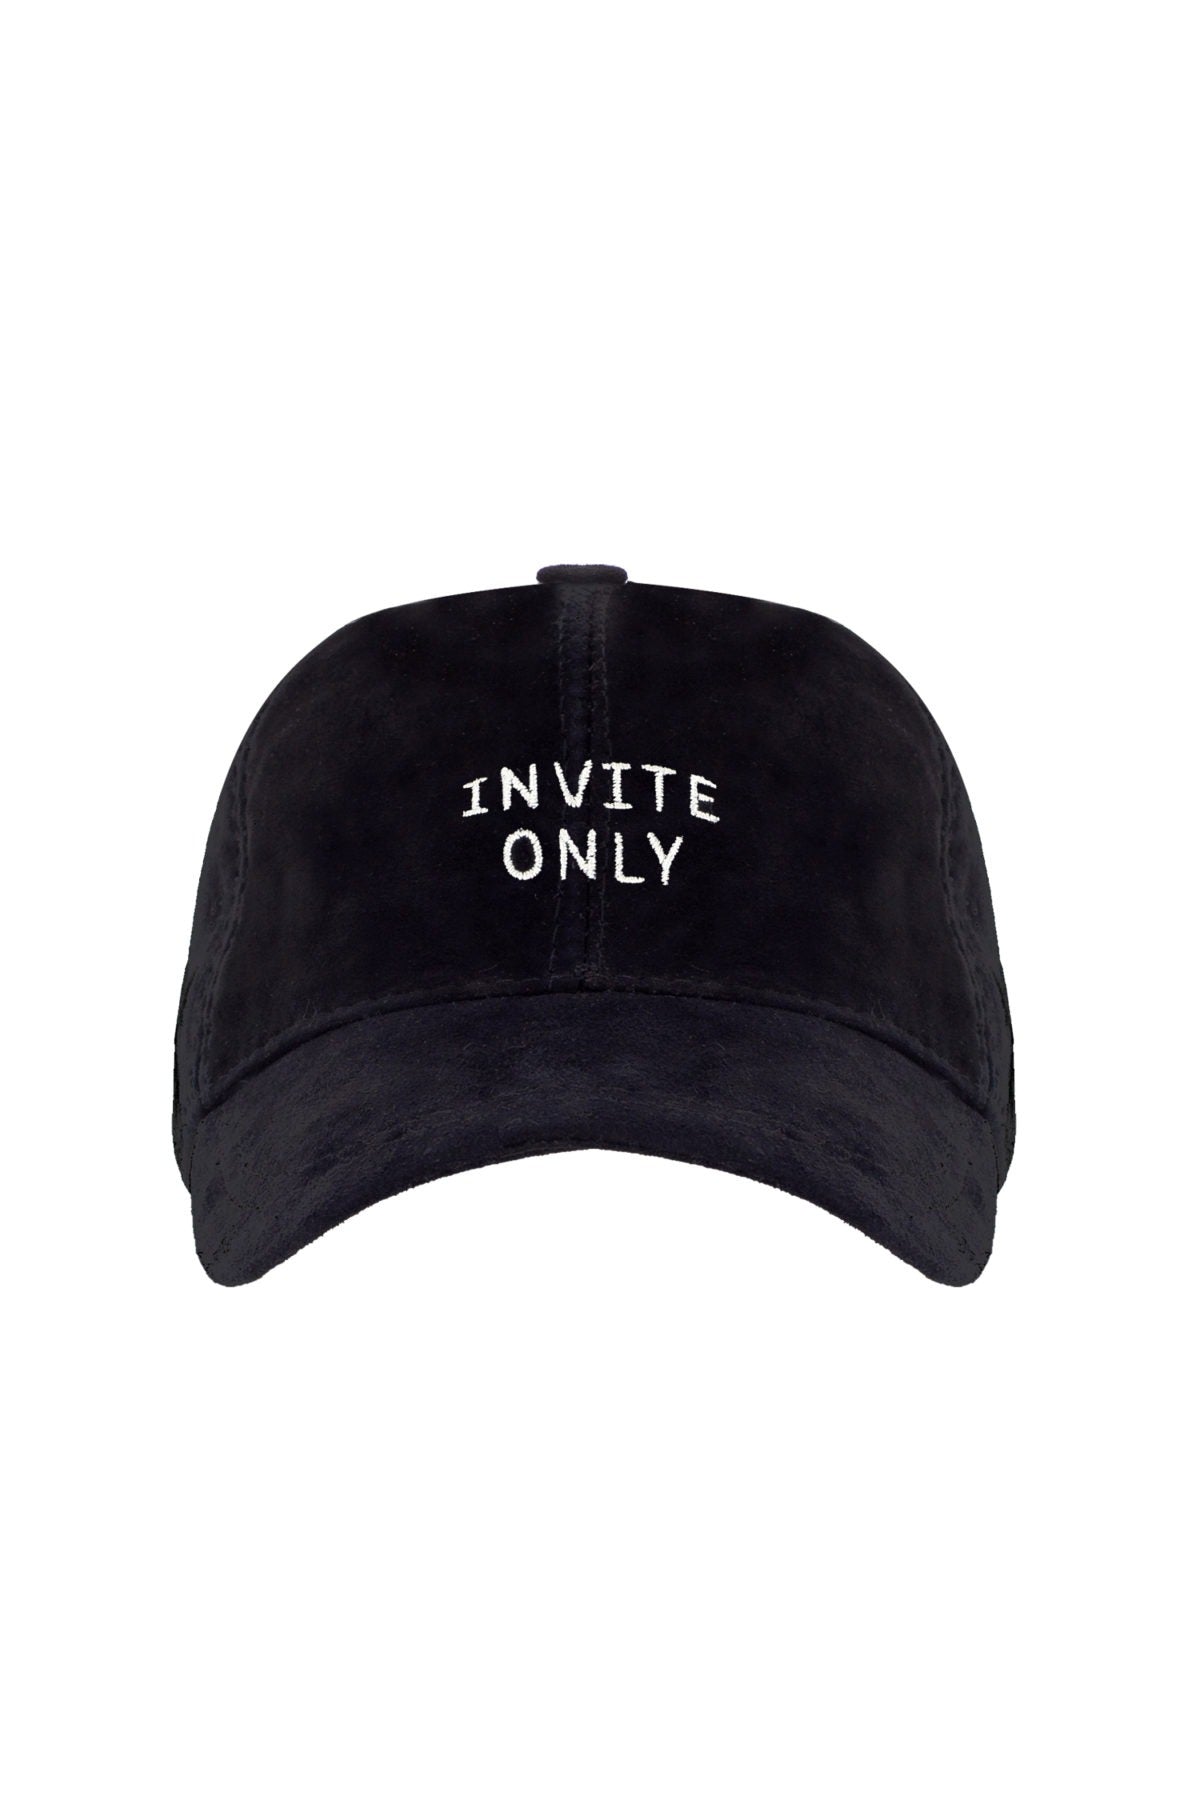 Invite Only - Black